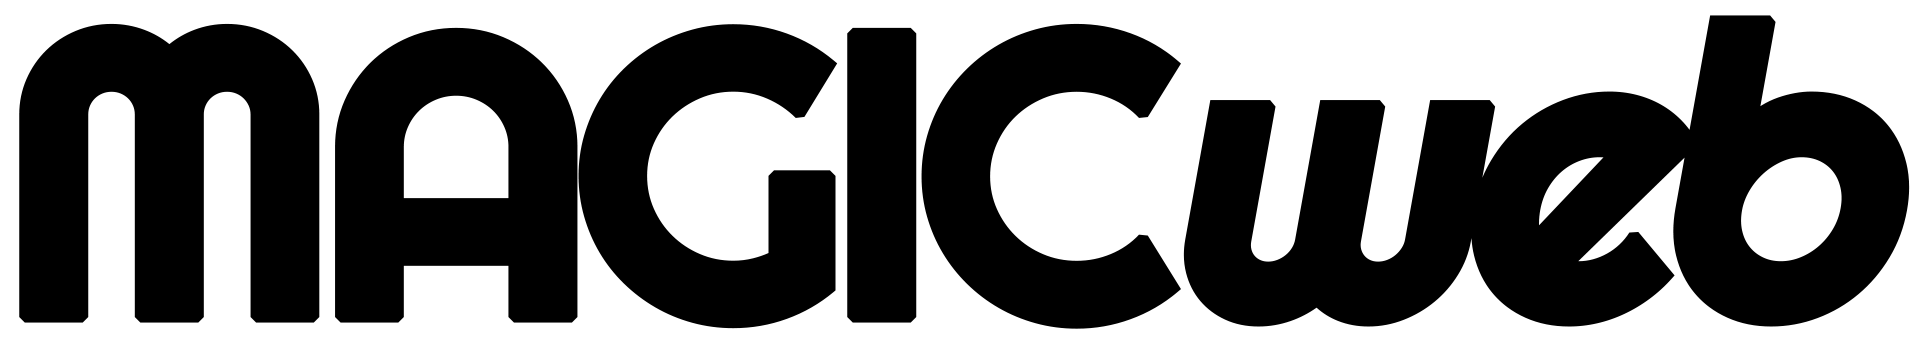 Magicweb logo uden baggrund (sort)